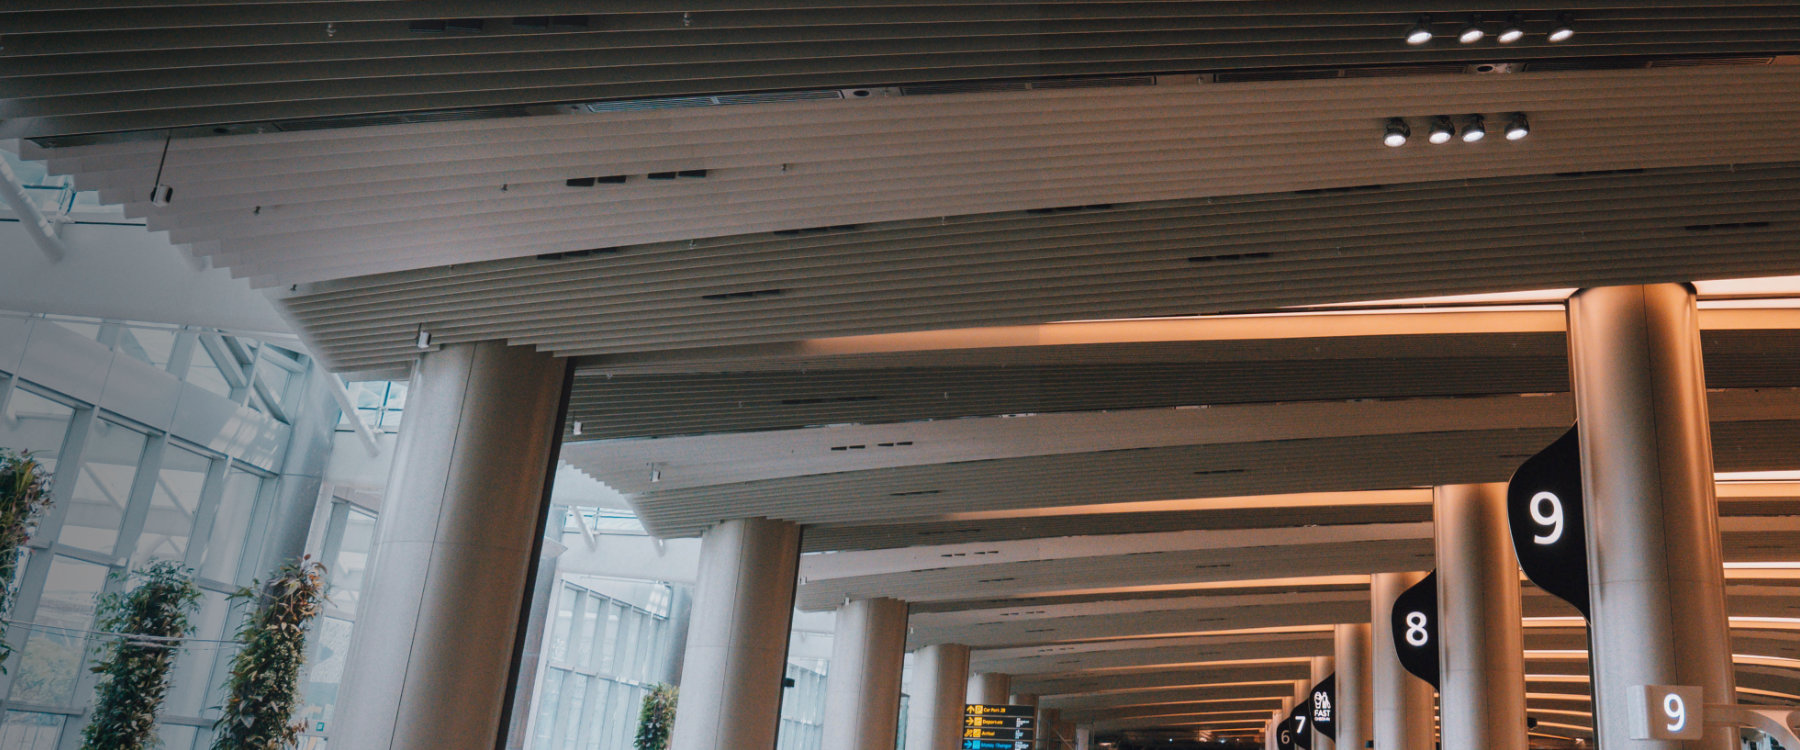 Terminal 2, T2, Changi Airport